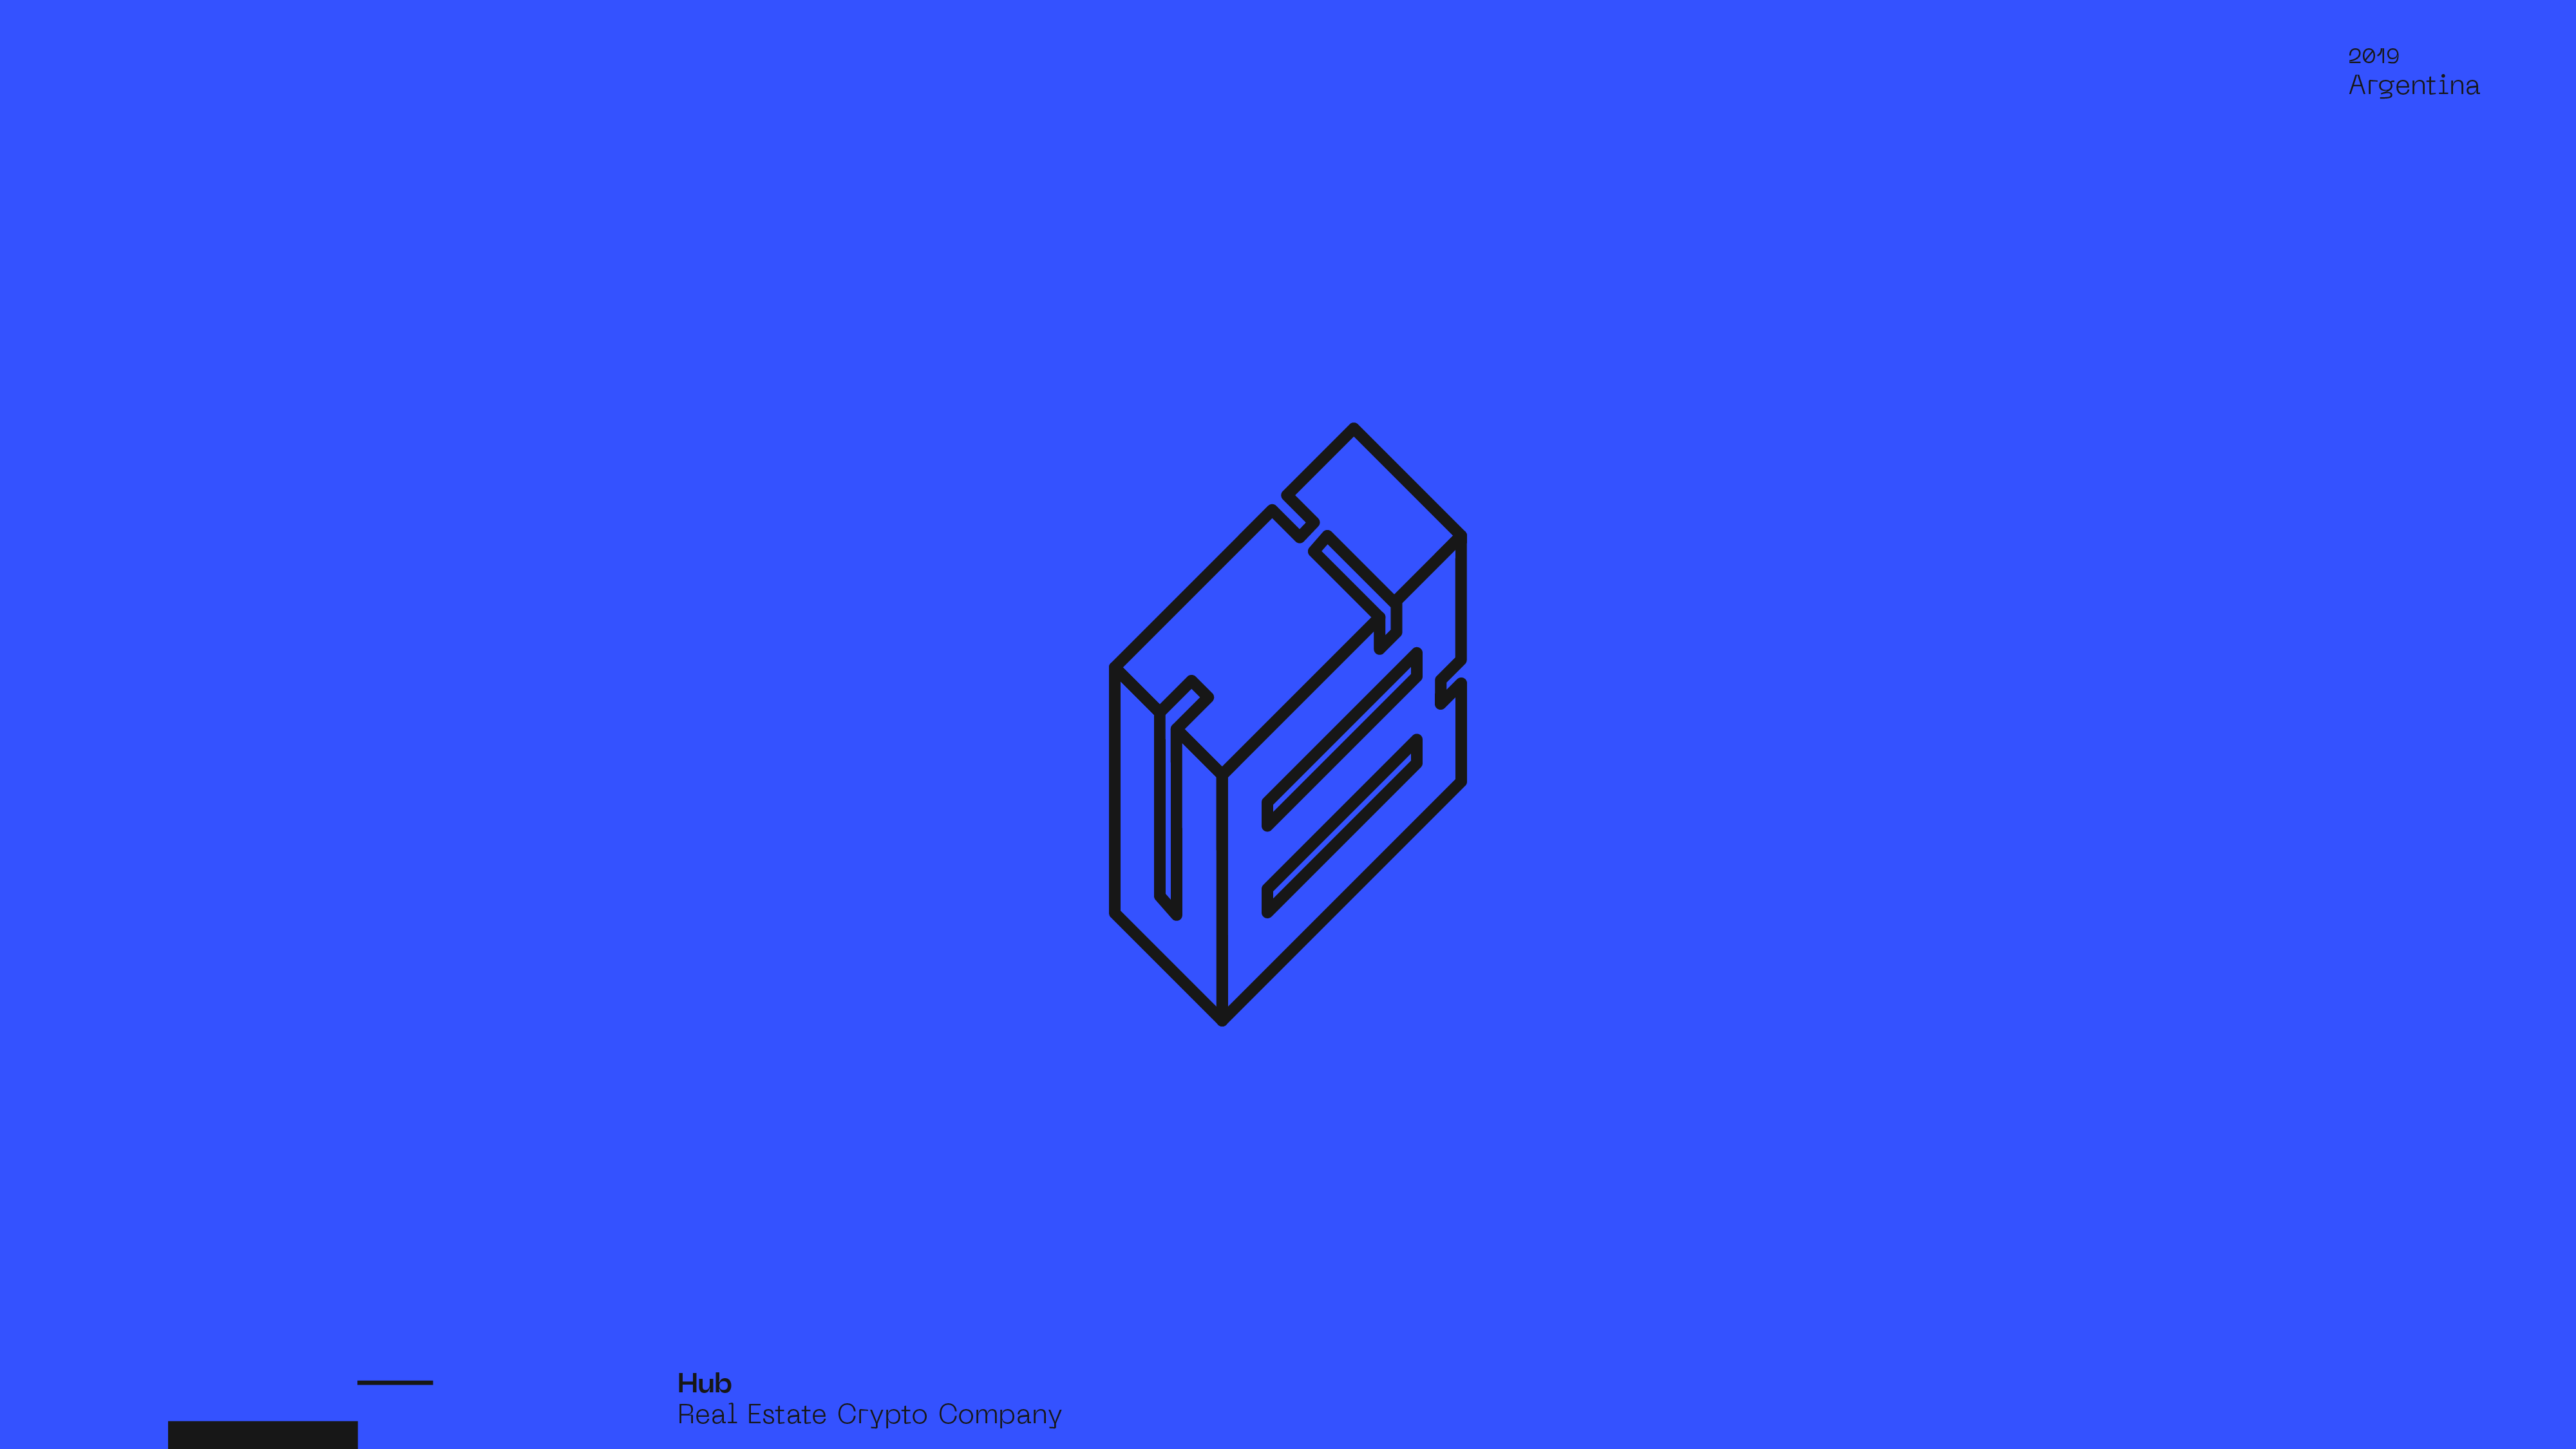 Guapo Design Studio by Esteban Ibarra Logofolio 2019 logo designer — HUB